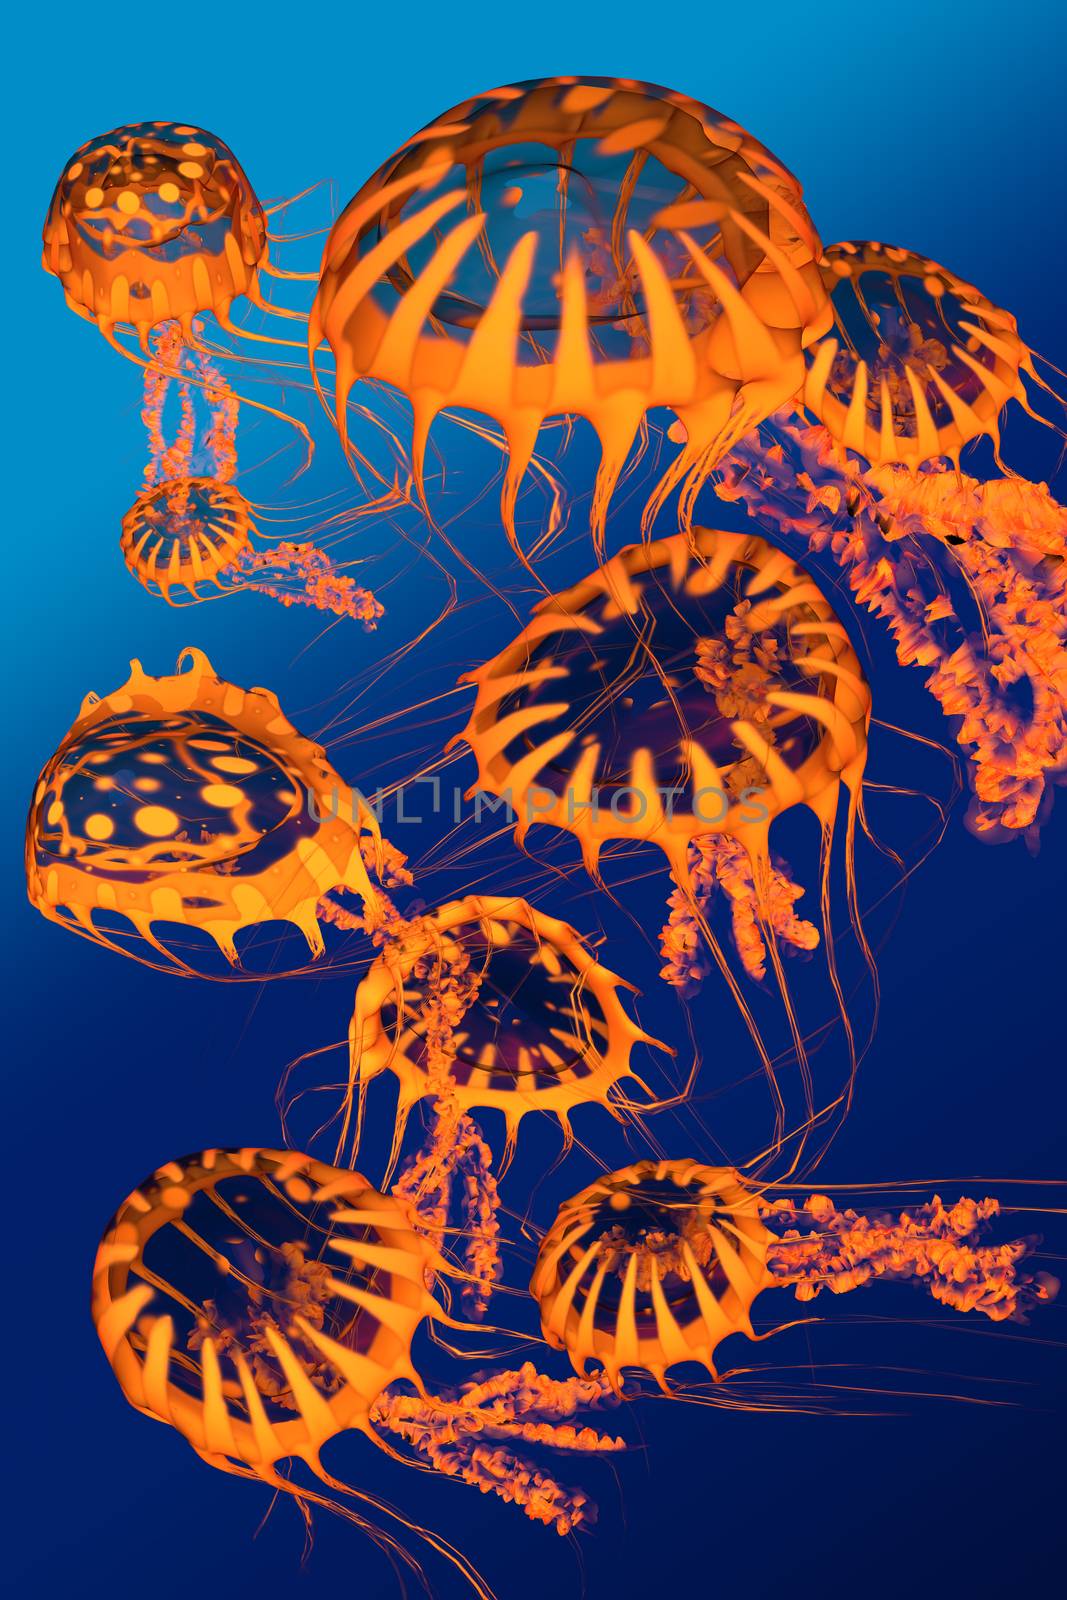 Golden Jellyfish Dance by Catmando